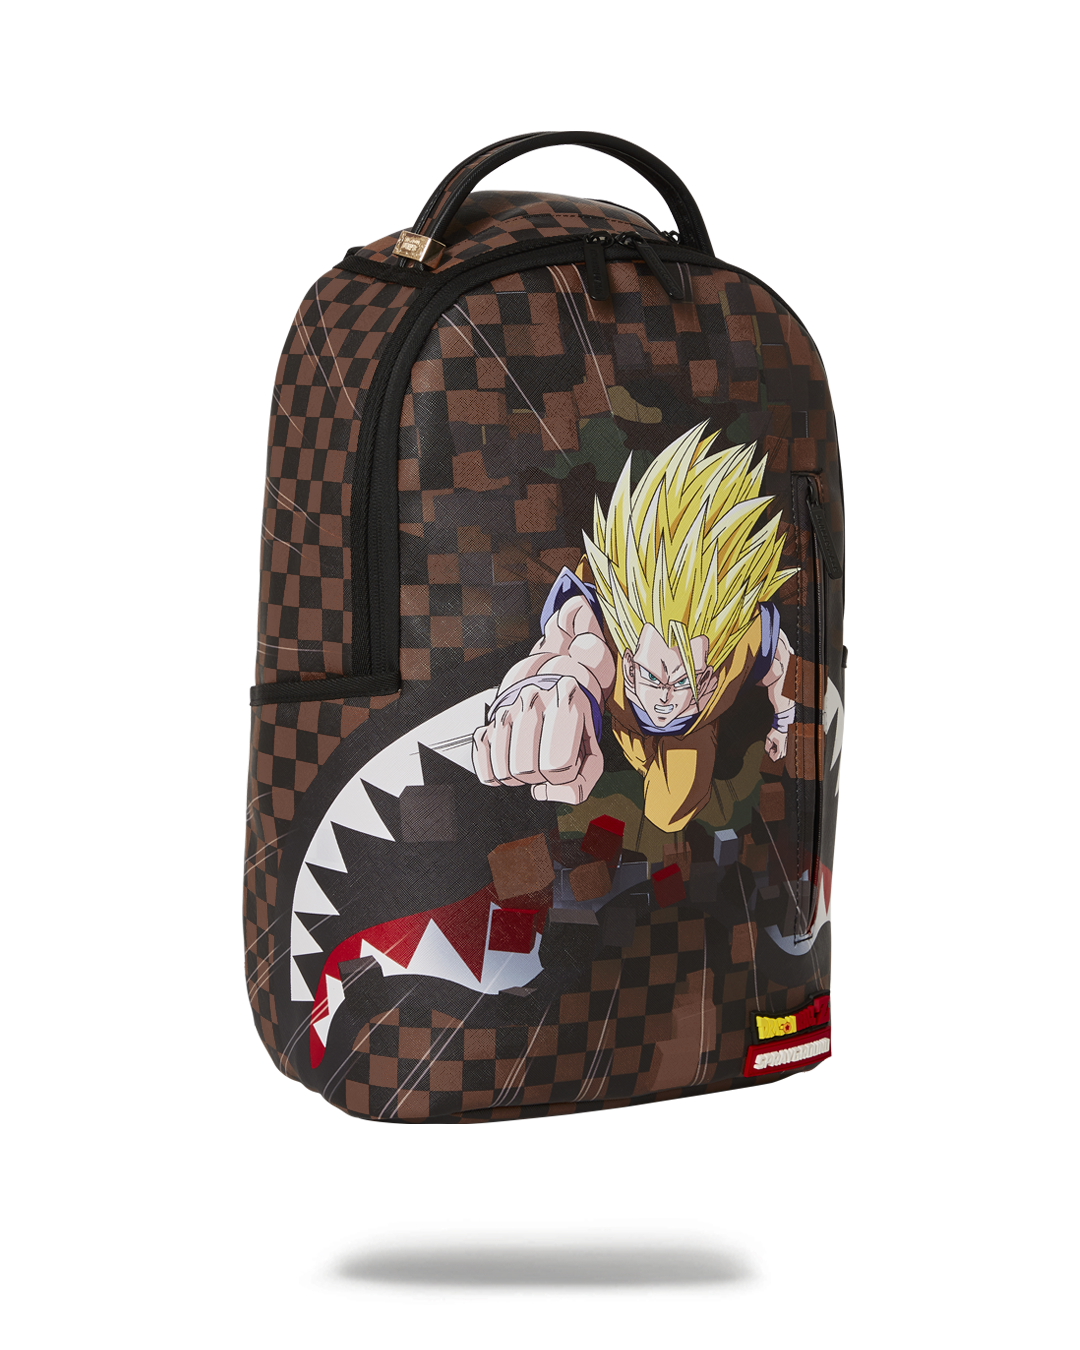 Limited Edition Sprayground Dragonball Z Goku Super Saiyan Backpack